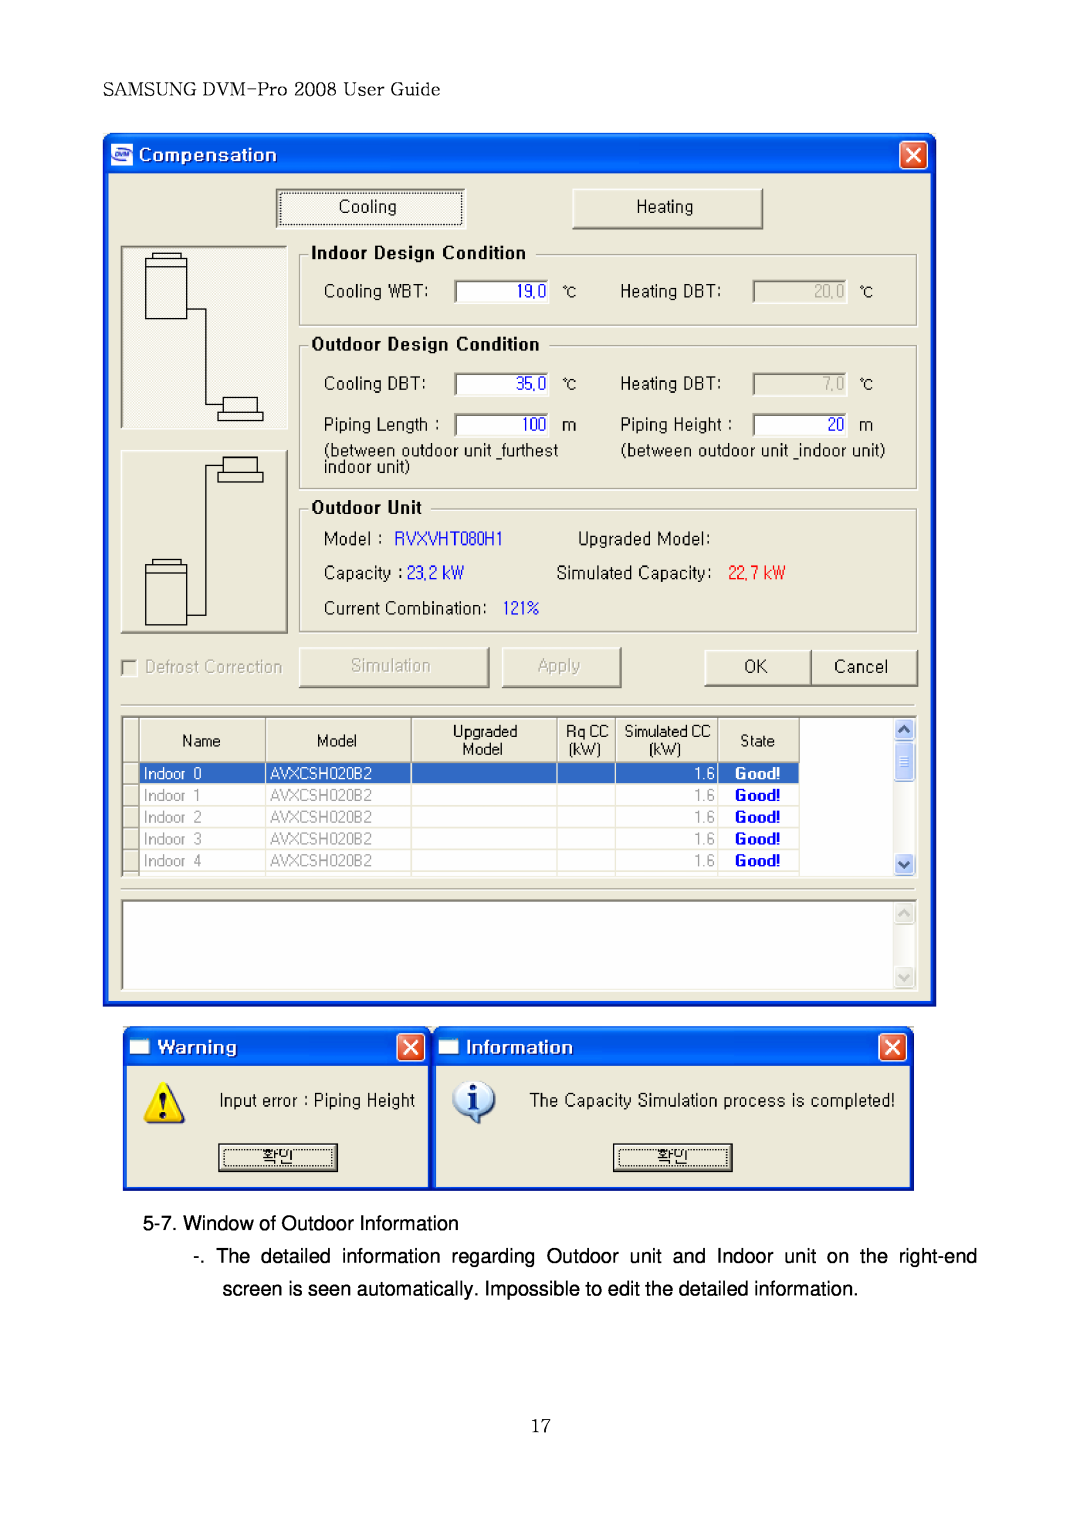 Samsung DVM-PRO 2008 user manual Window of Outdoor Information, SAMSUNG DVM-Pro2008 User Guide 